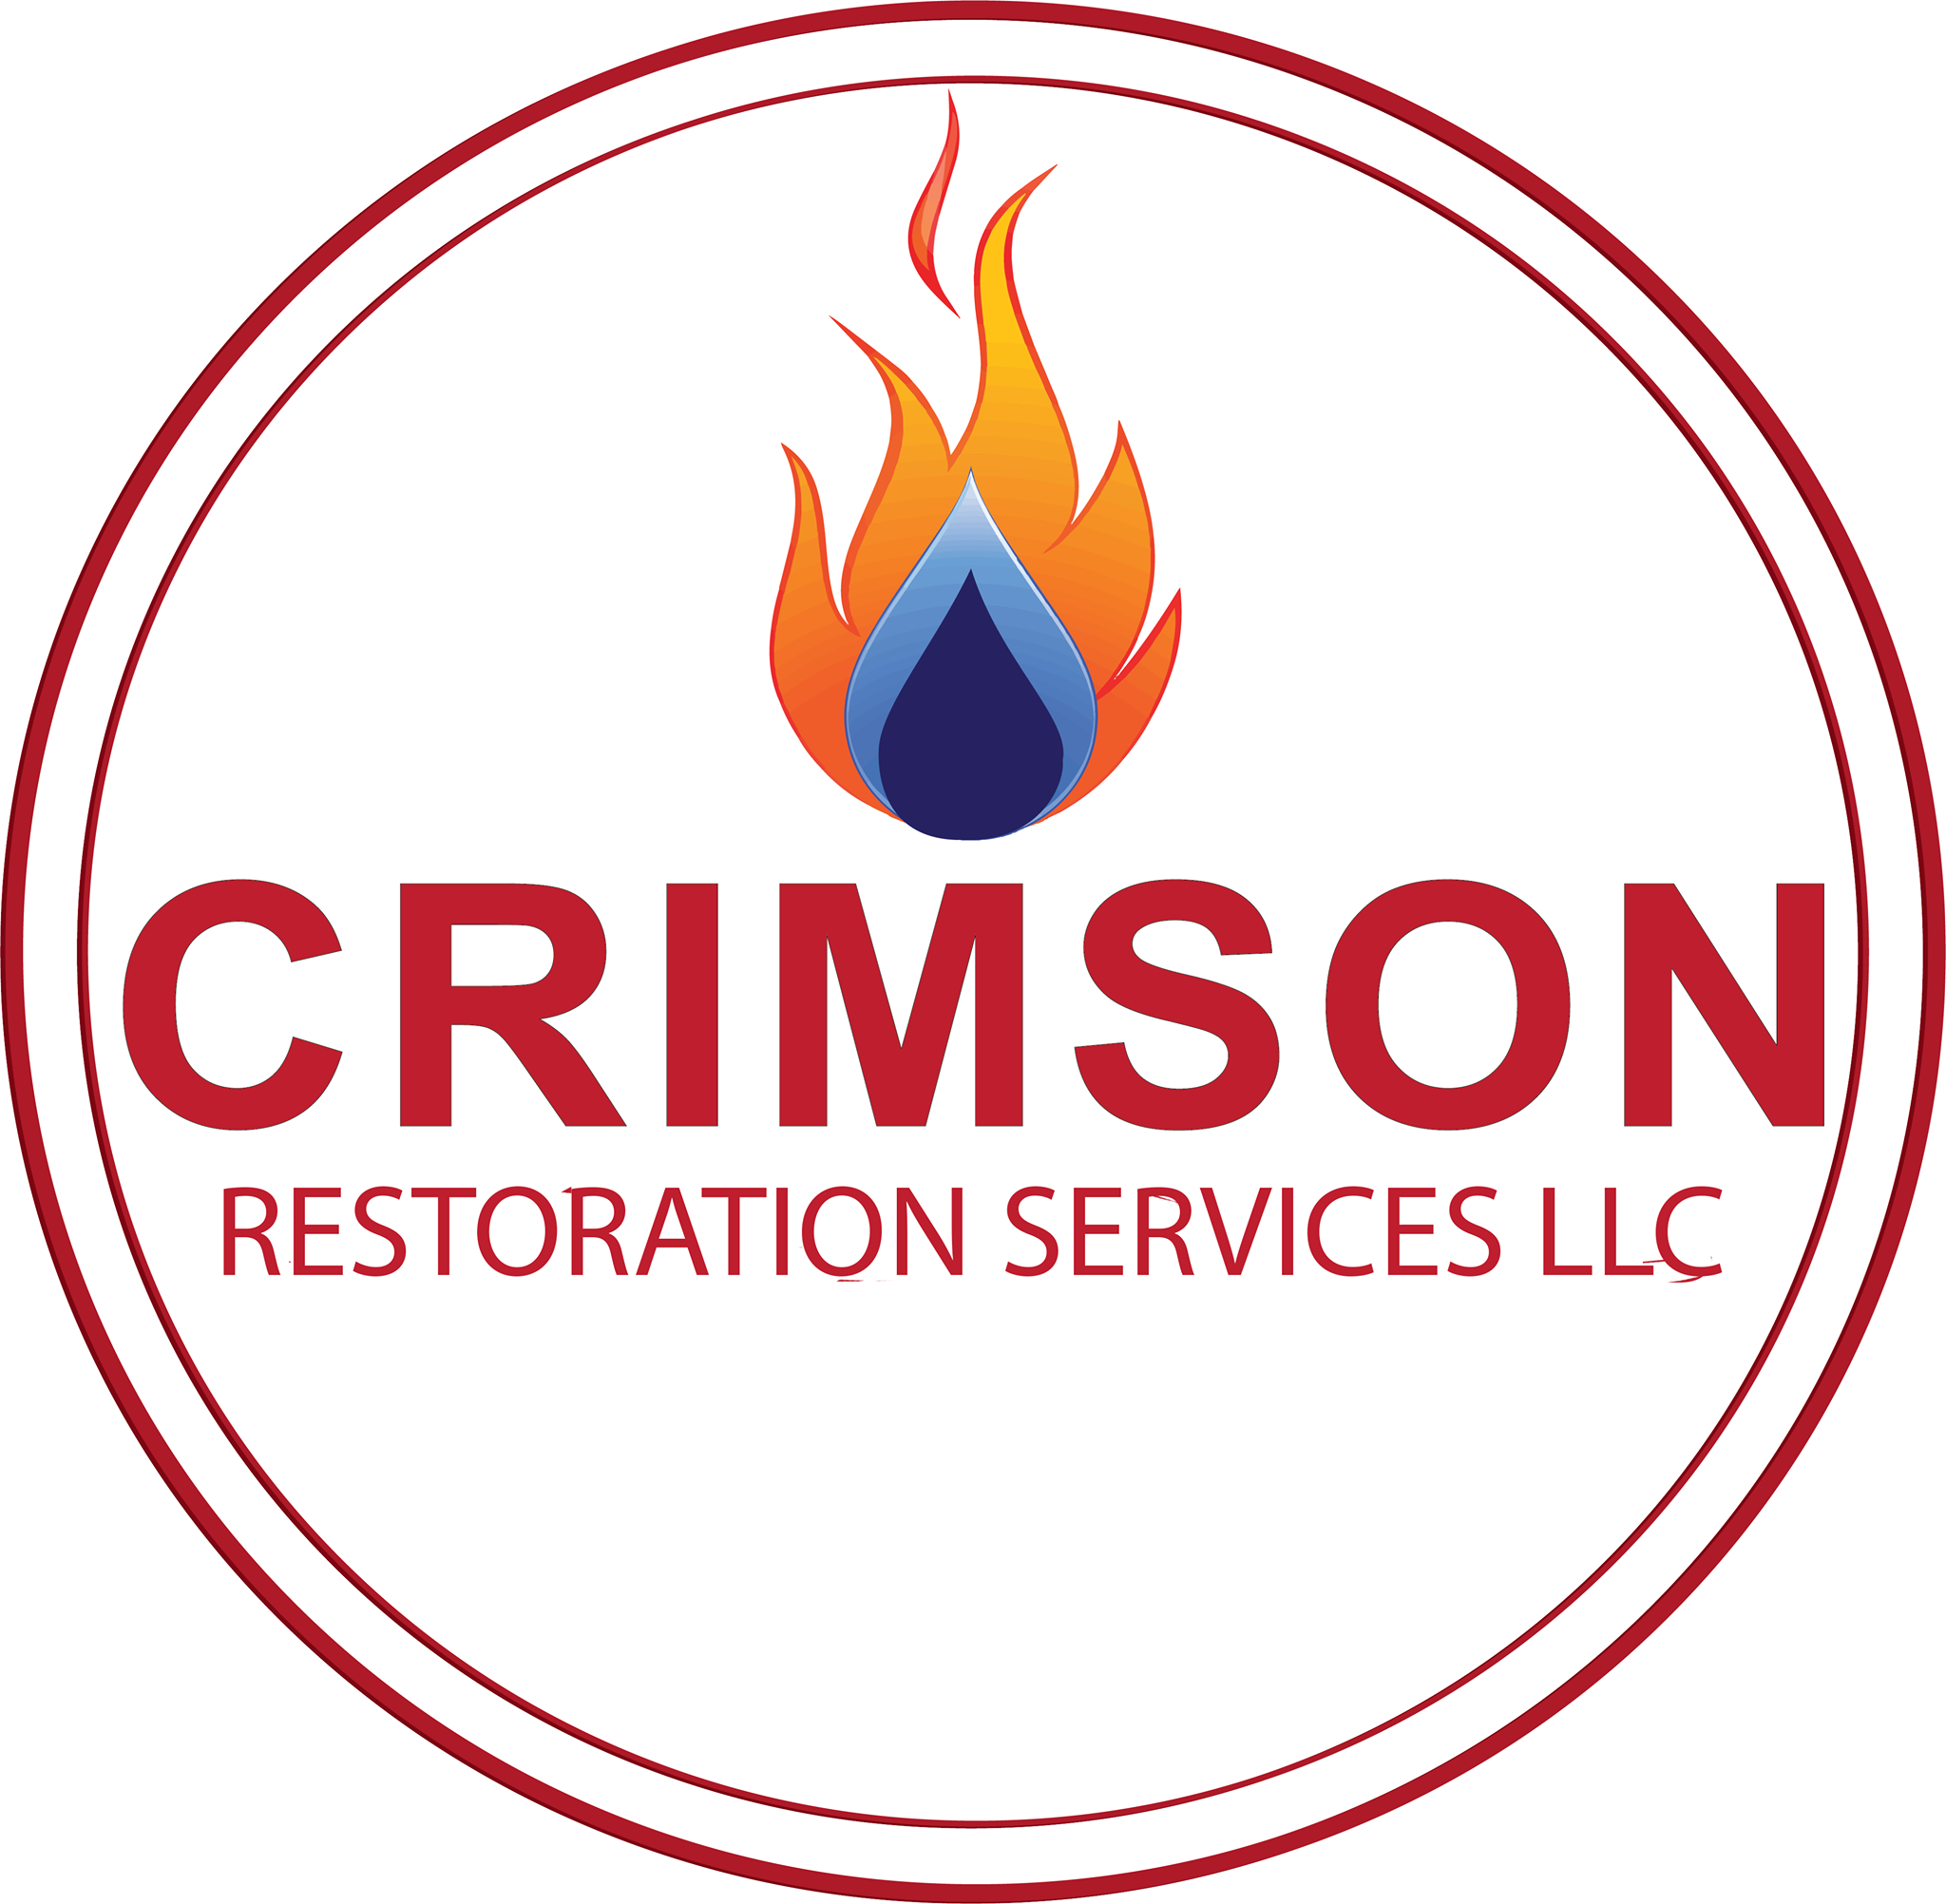 Crimson Restoration Services LLC logo